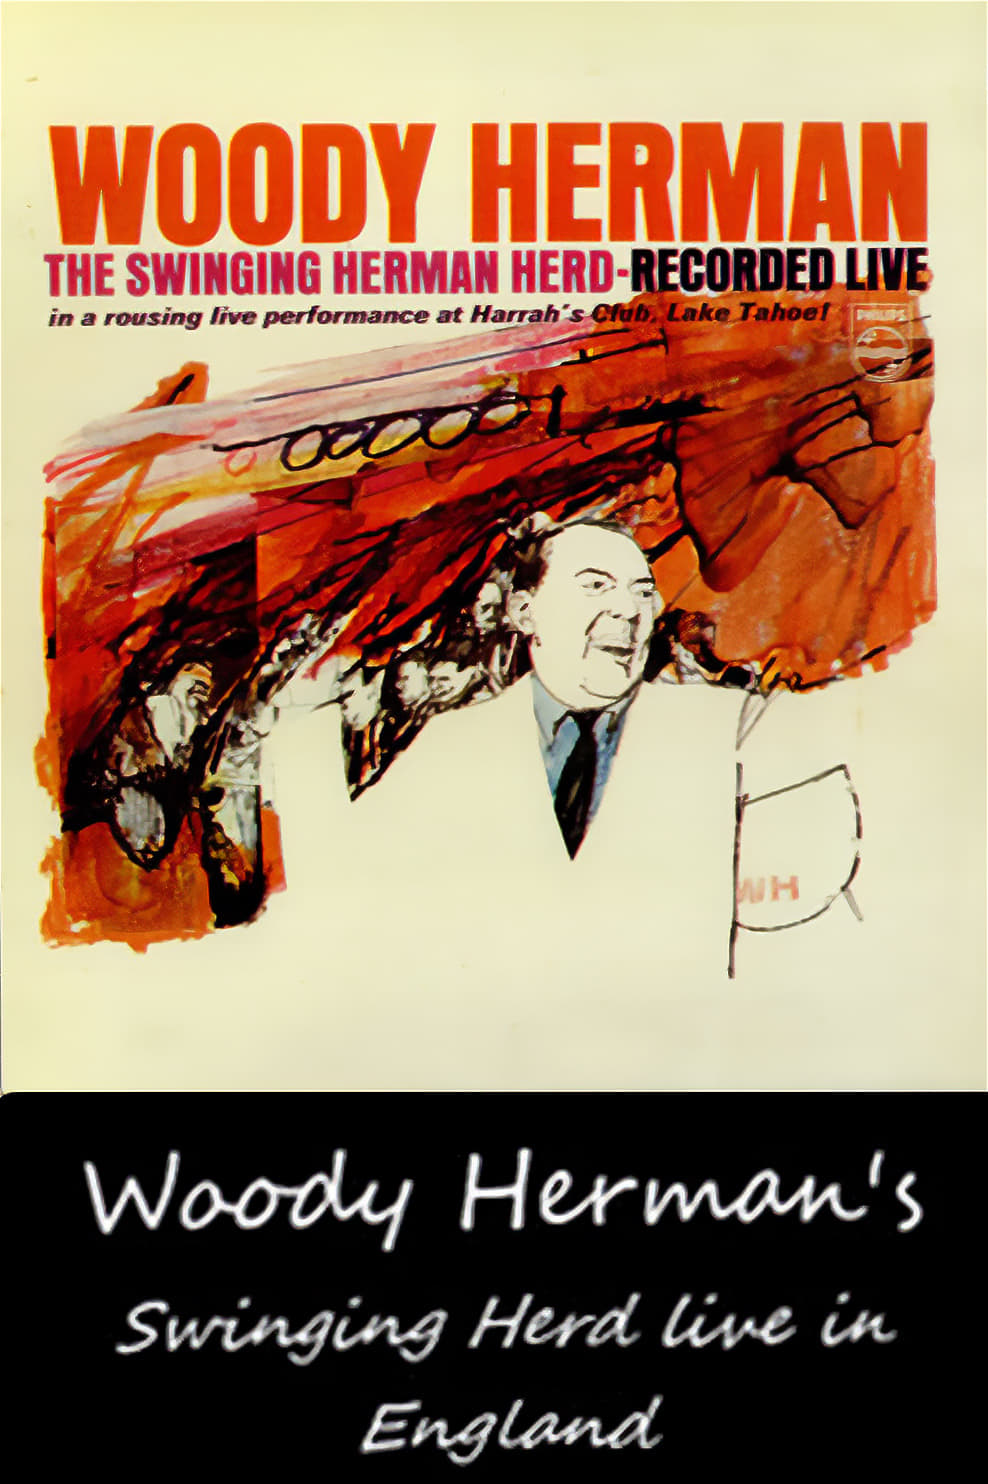 Woody Herman's Swinging Herd live in England